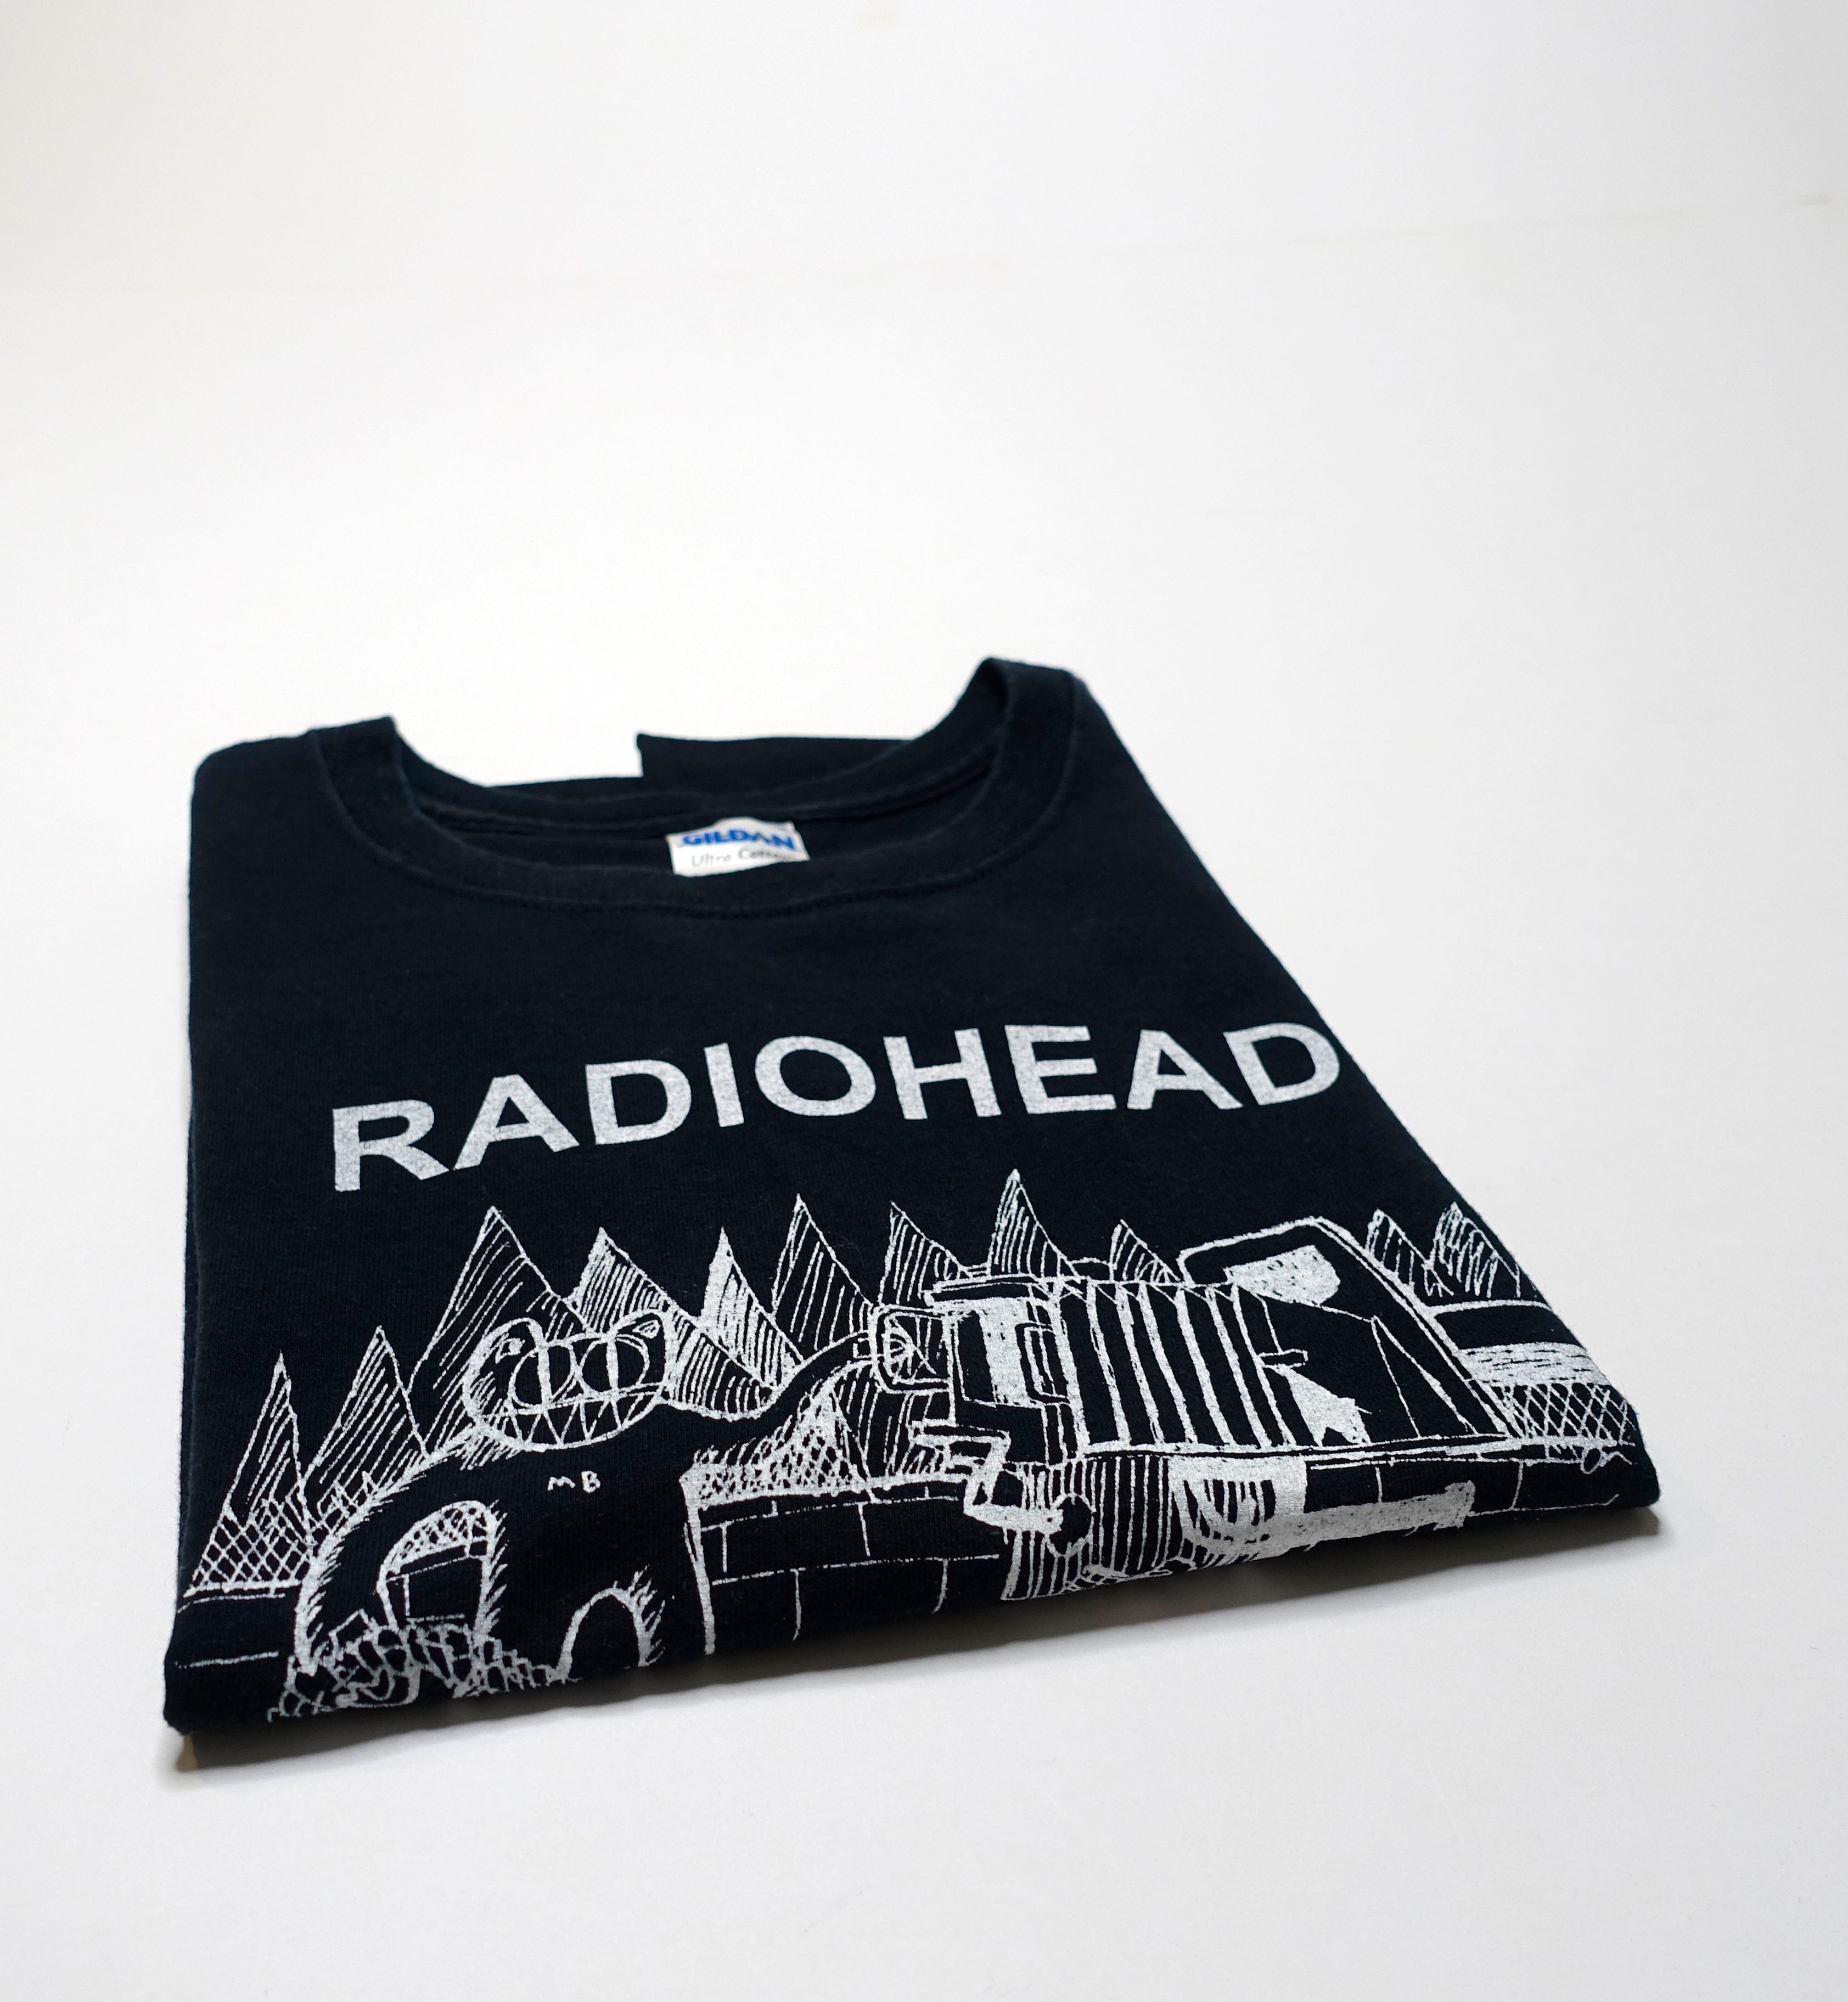 Radiohead - Stanley Donwood Cat Photographer Tour Shirt Size Large